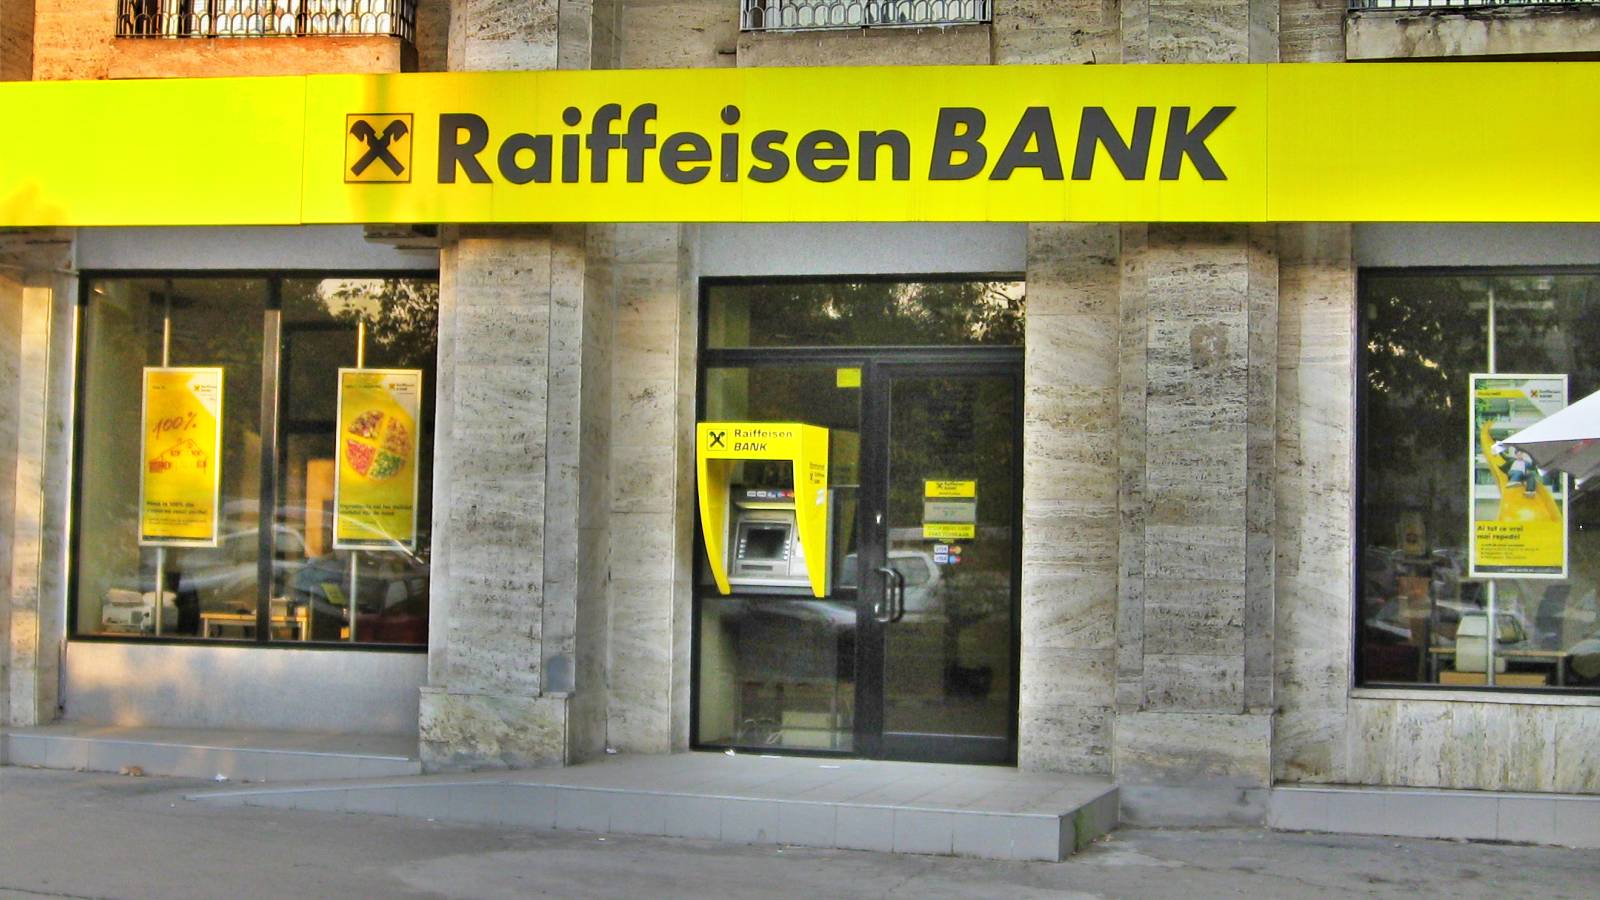 Raiffeisen Bank acquisition